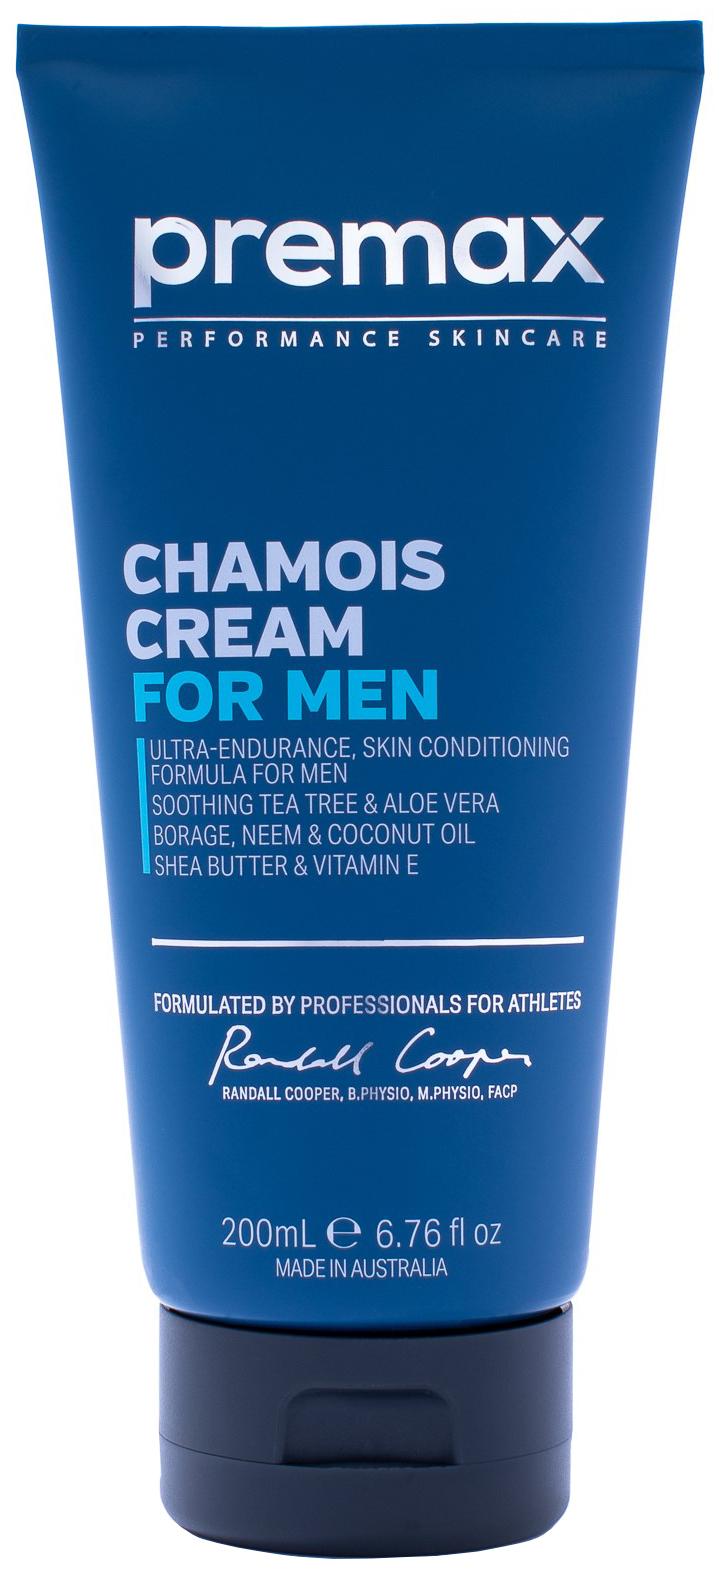 Image of Premax Chamois Cream for Men - Neutral